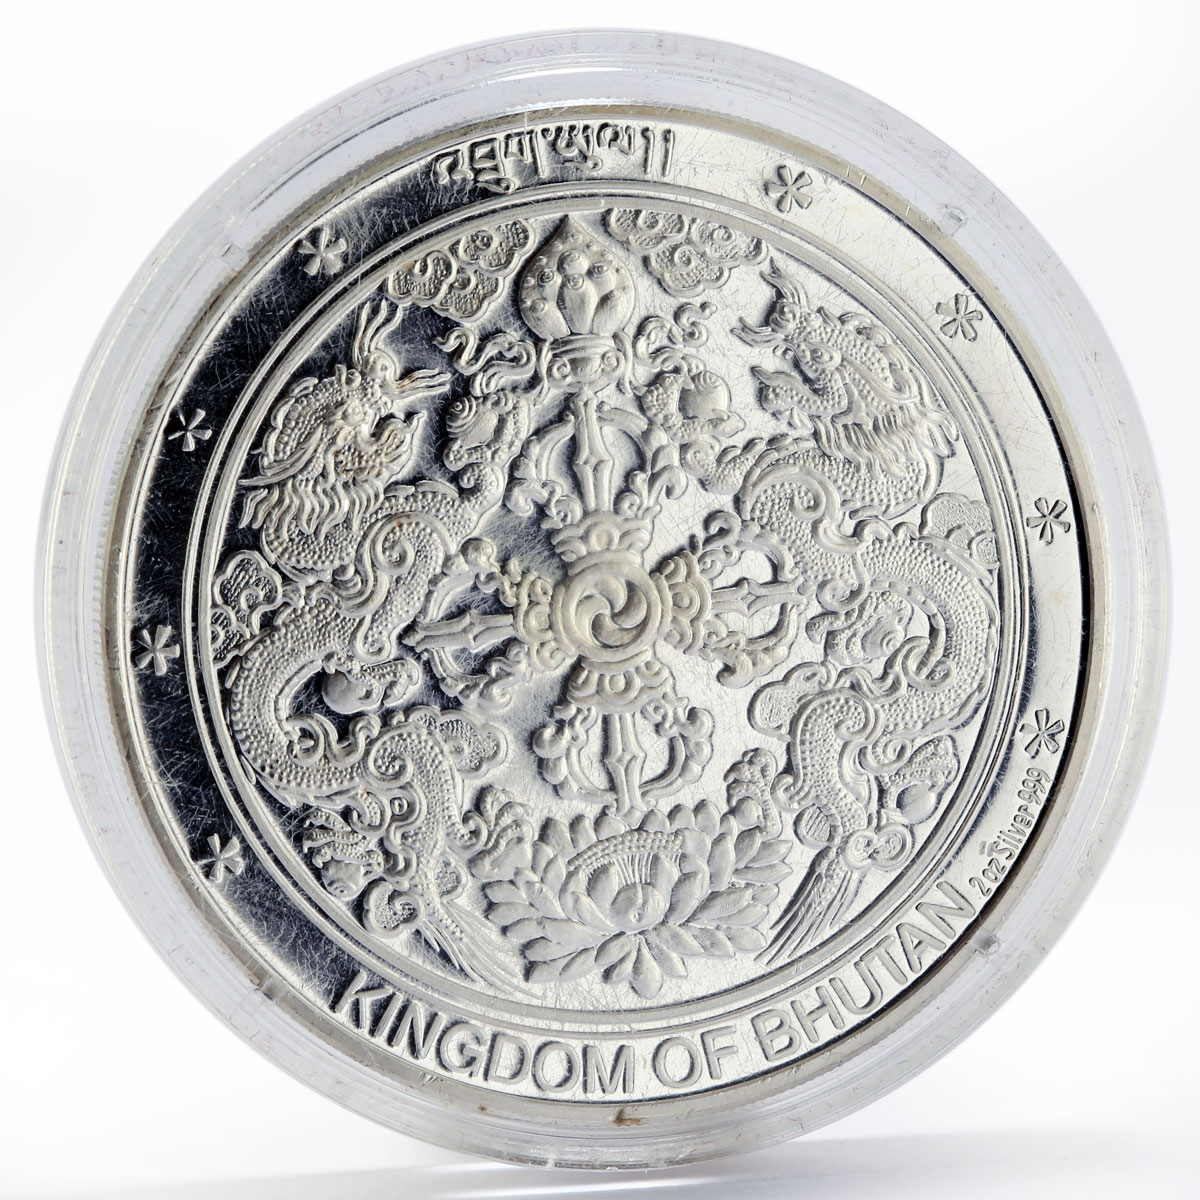 Bhutan 500 ngultrum Wonders of World - Angkor Wat silver coin 2005